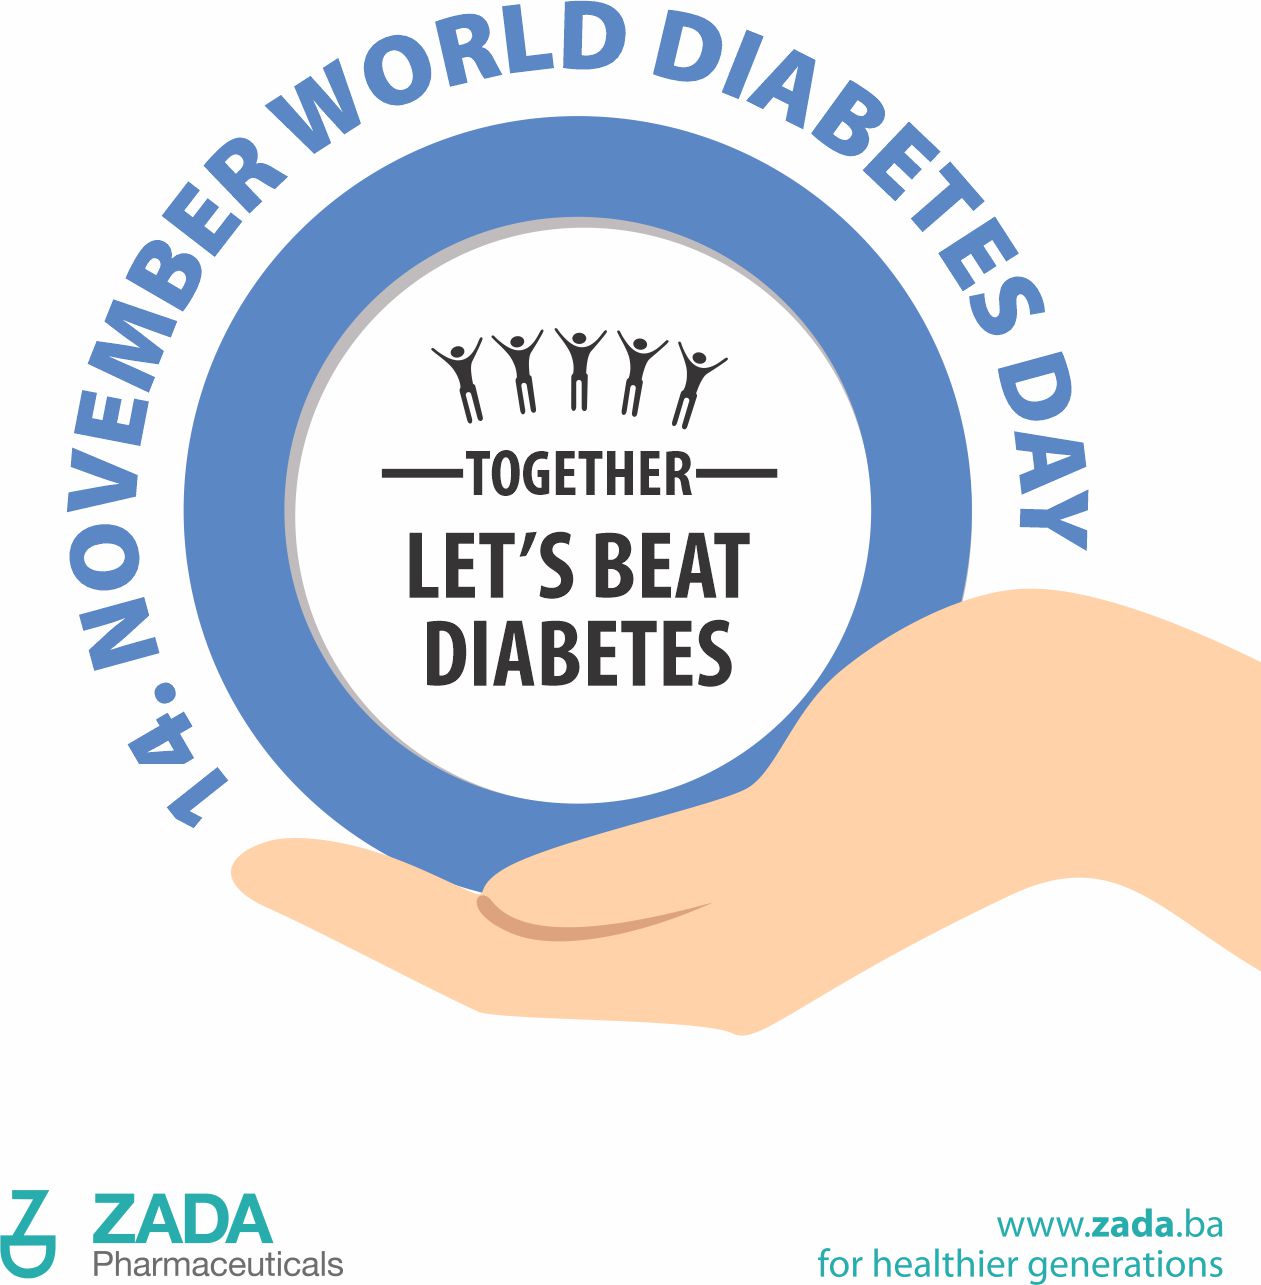 World Diabetes Day – November 14